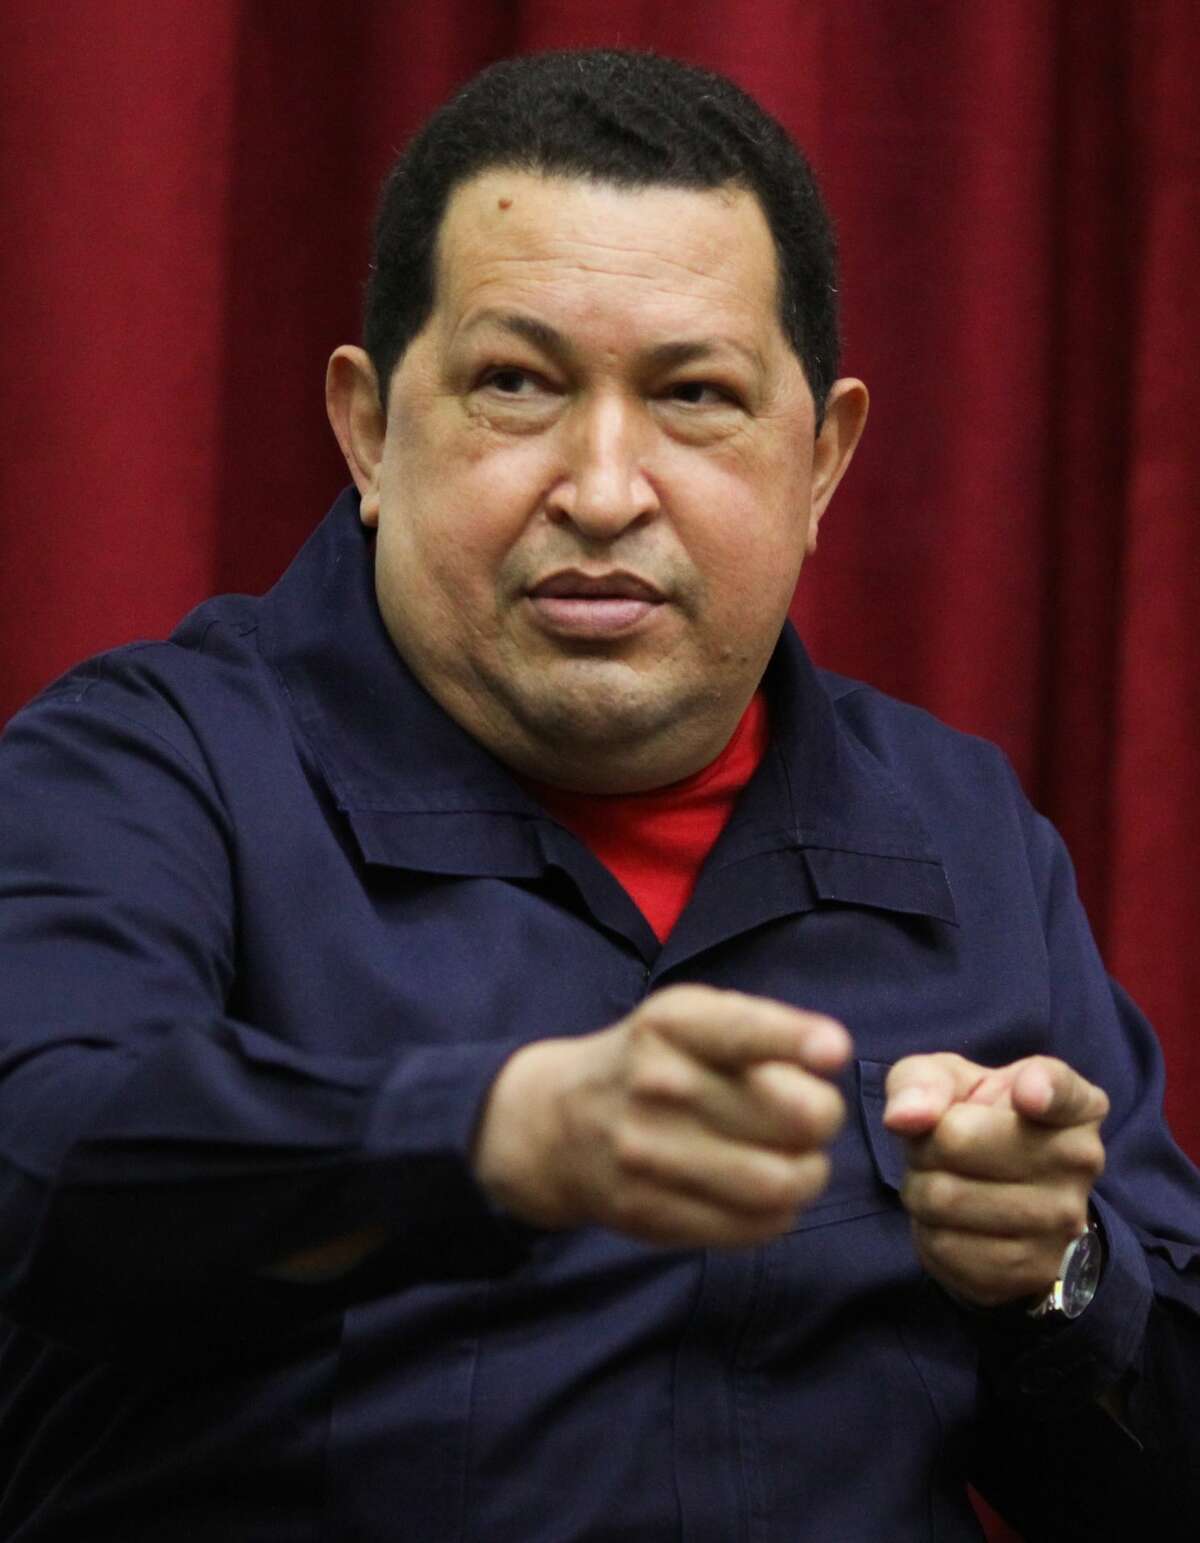 Venezuela’s President Hugo Chavez speaks during a televised program from the Miraflores presidential palace in Caracas, Venezuela.